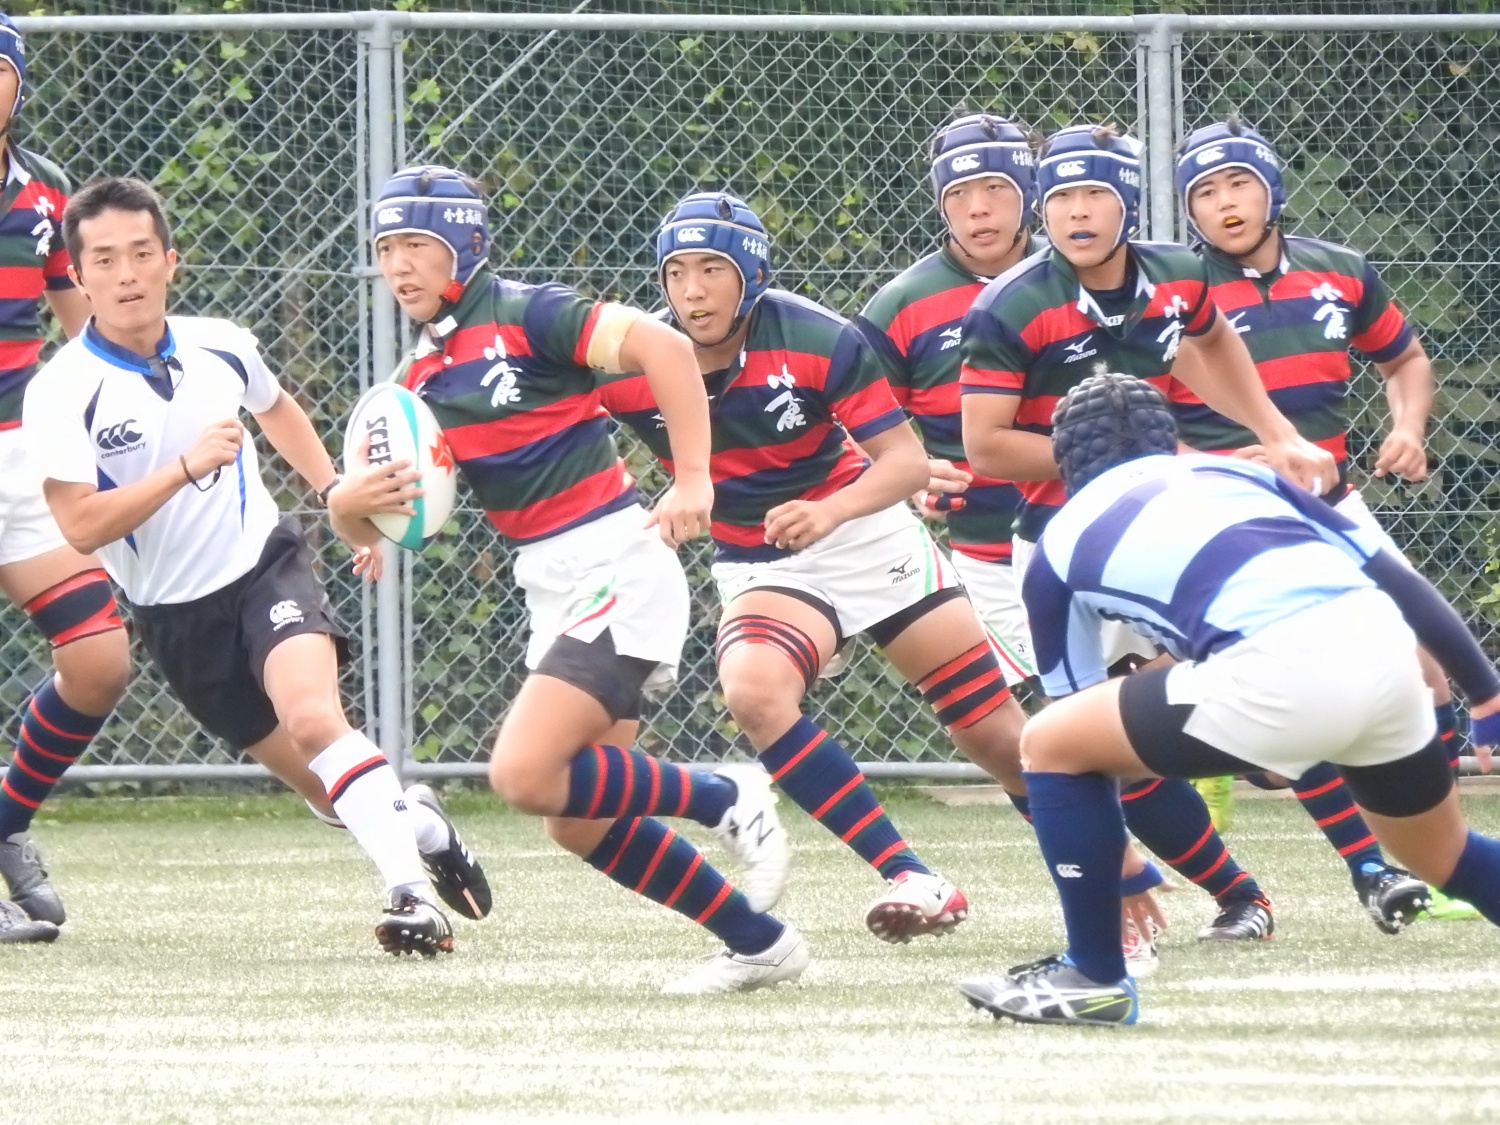 http://kokura-rugby.sakura.ne.jp/DSCN7480_xlarge.JPG